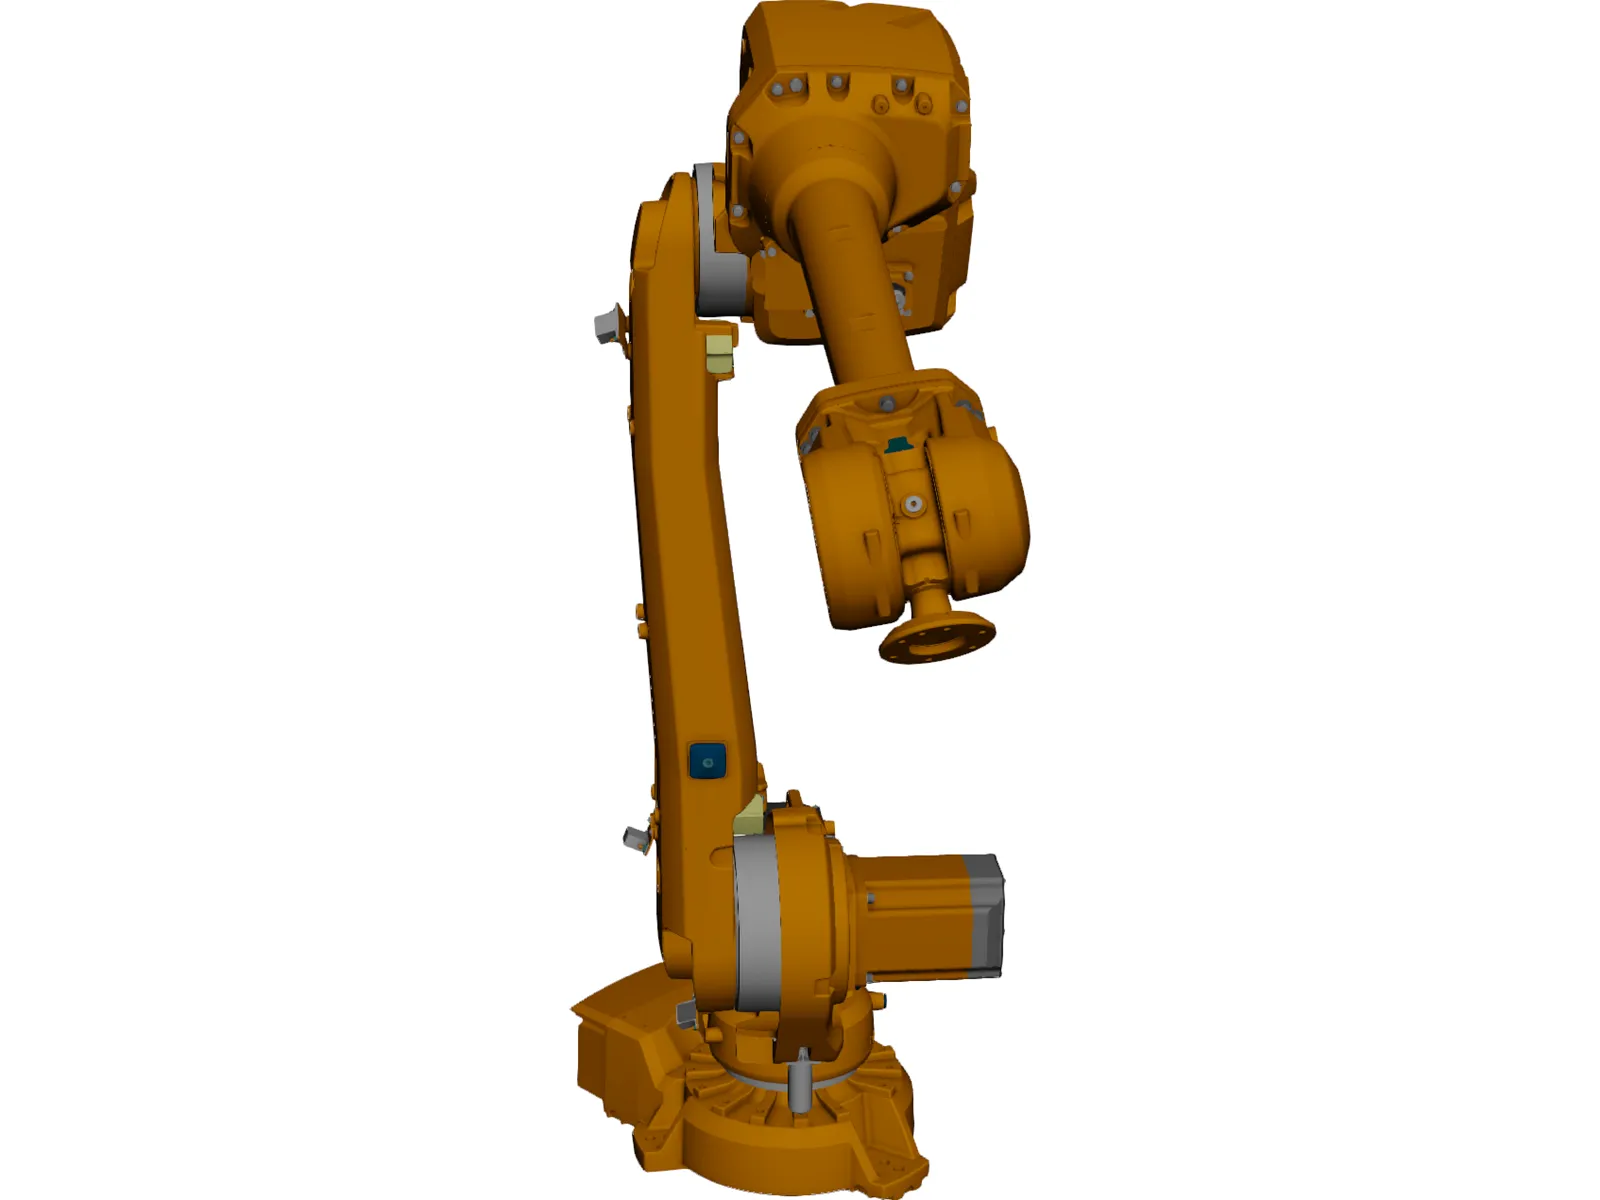 ABB IRB4600 Indistrial Robot 3D Model